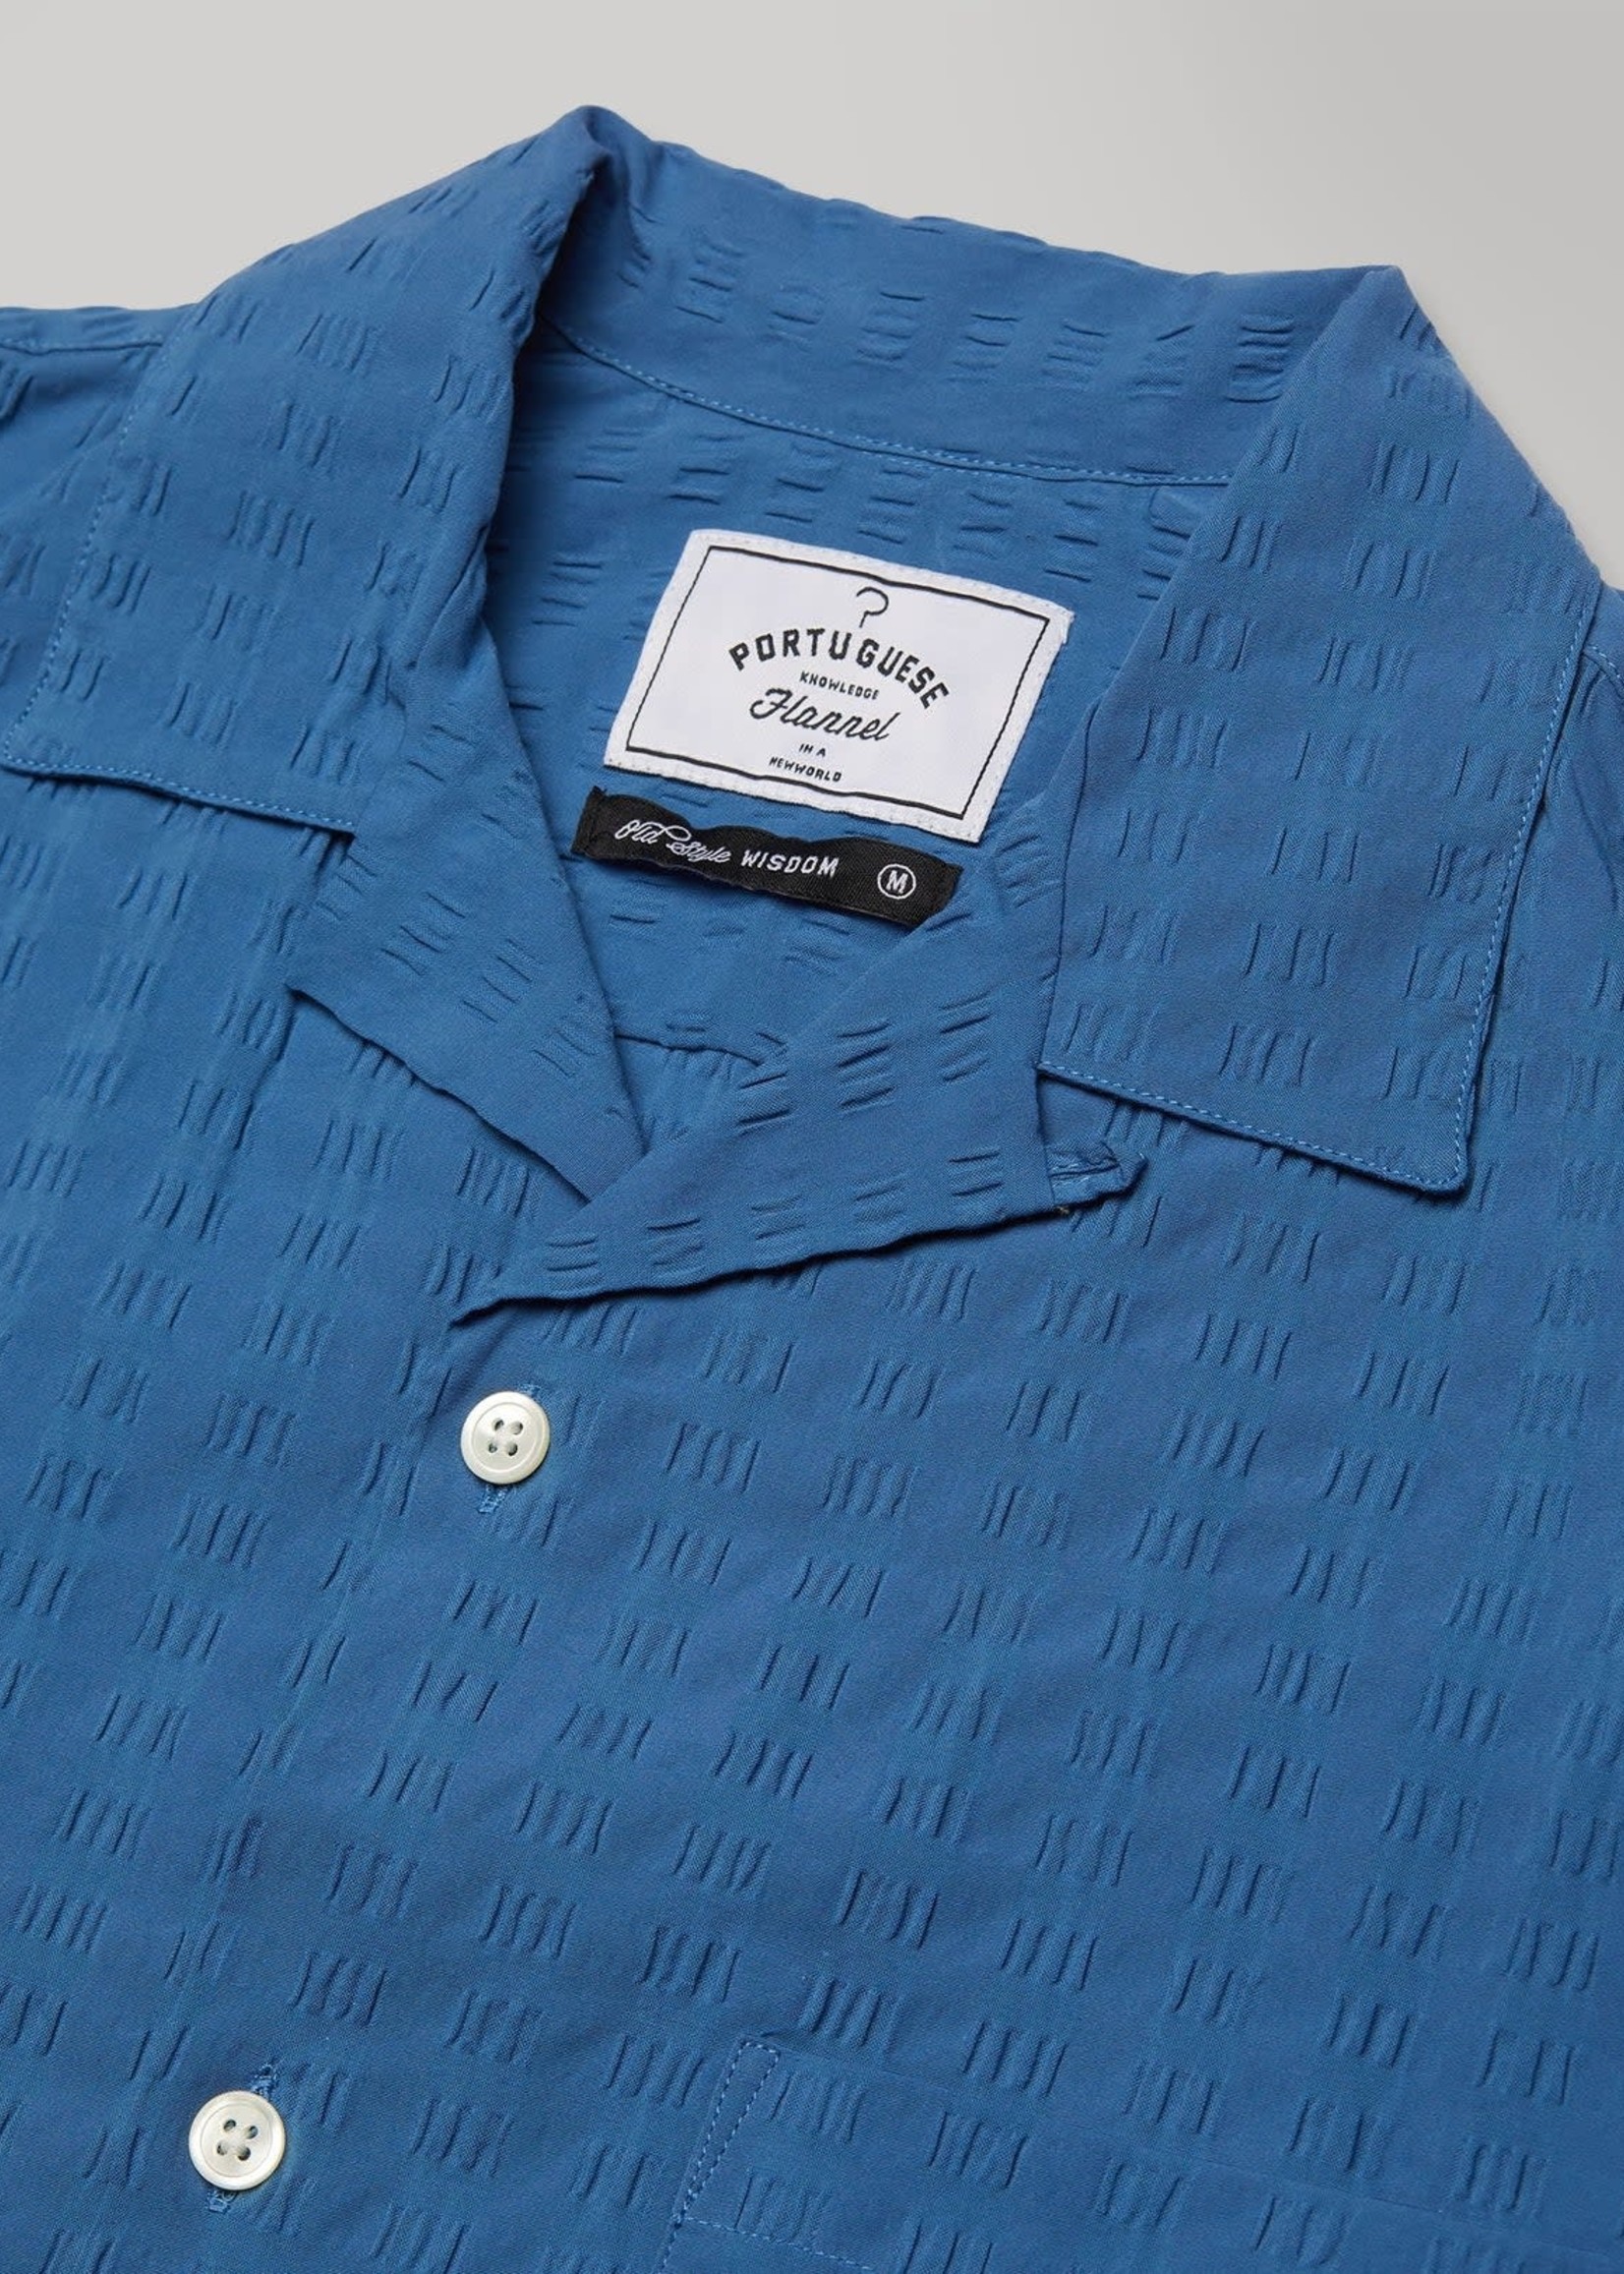 Portuguese Flannel Portuguese Flannel Big Square Blue Seersucker S/S Shirt